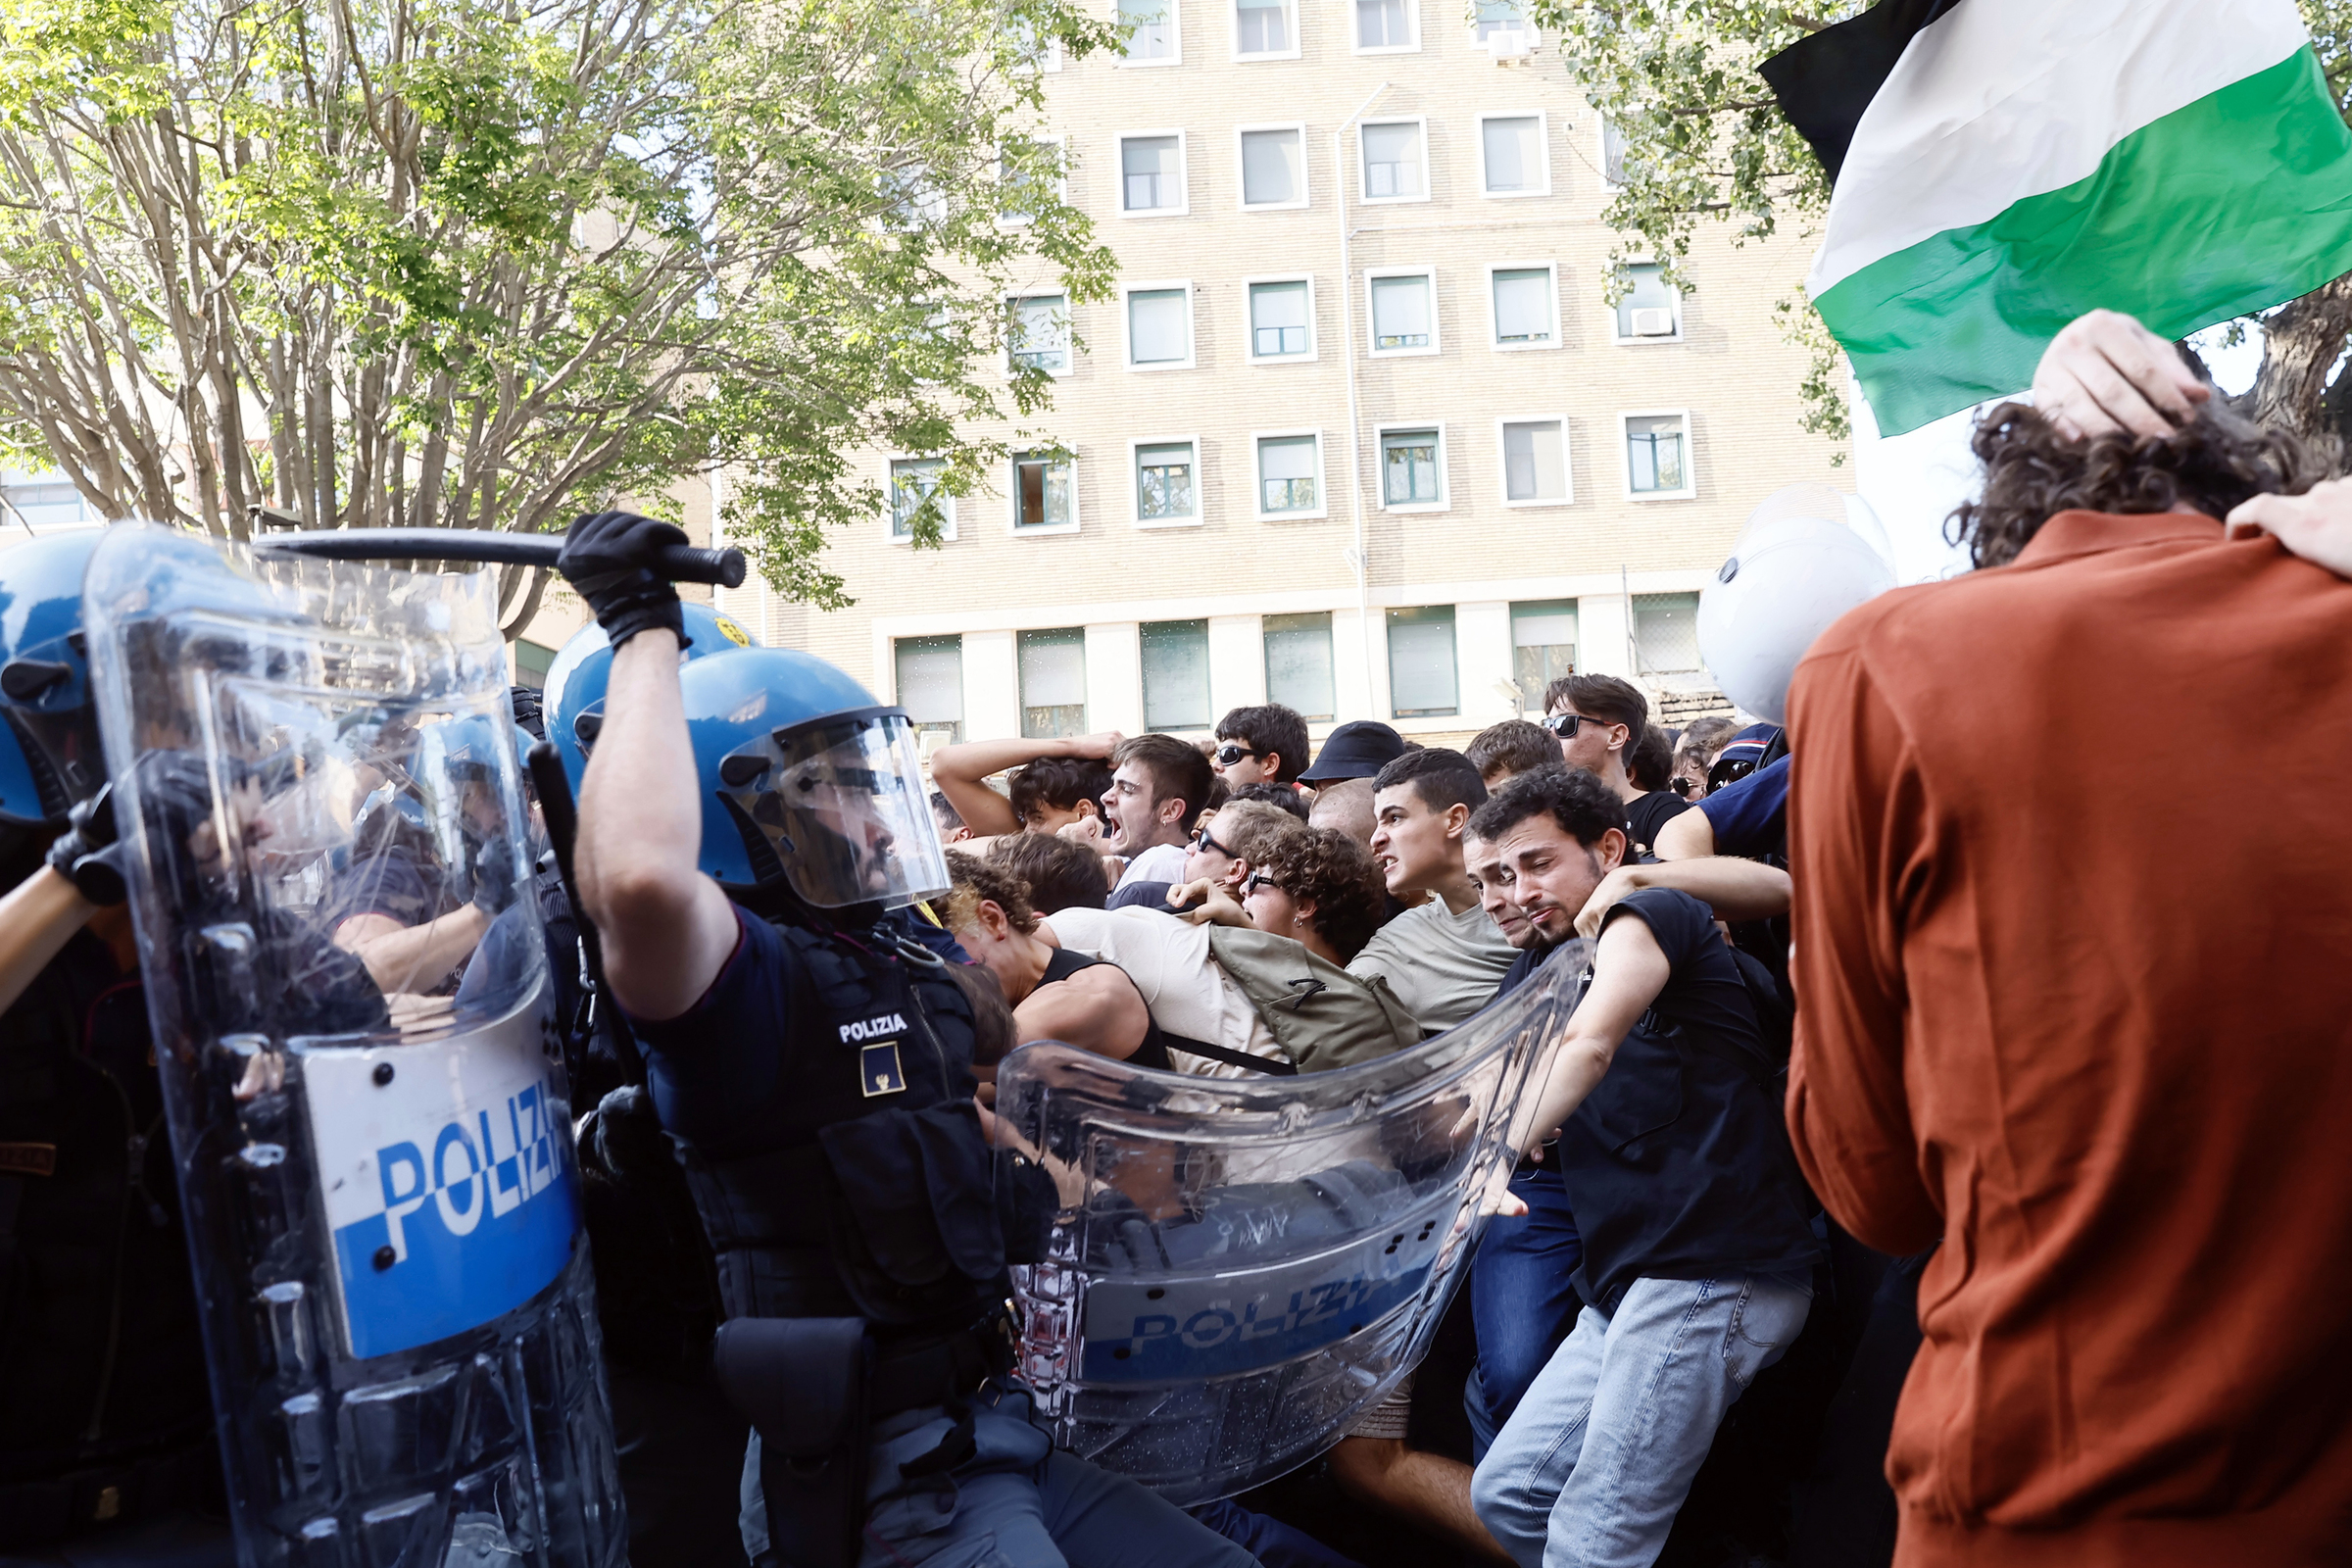 Police Violence in Pro-Palestine Demos in Italy